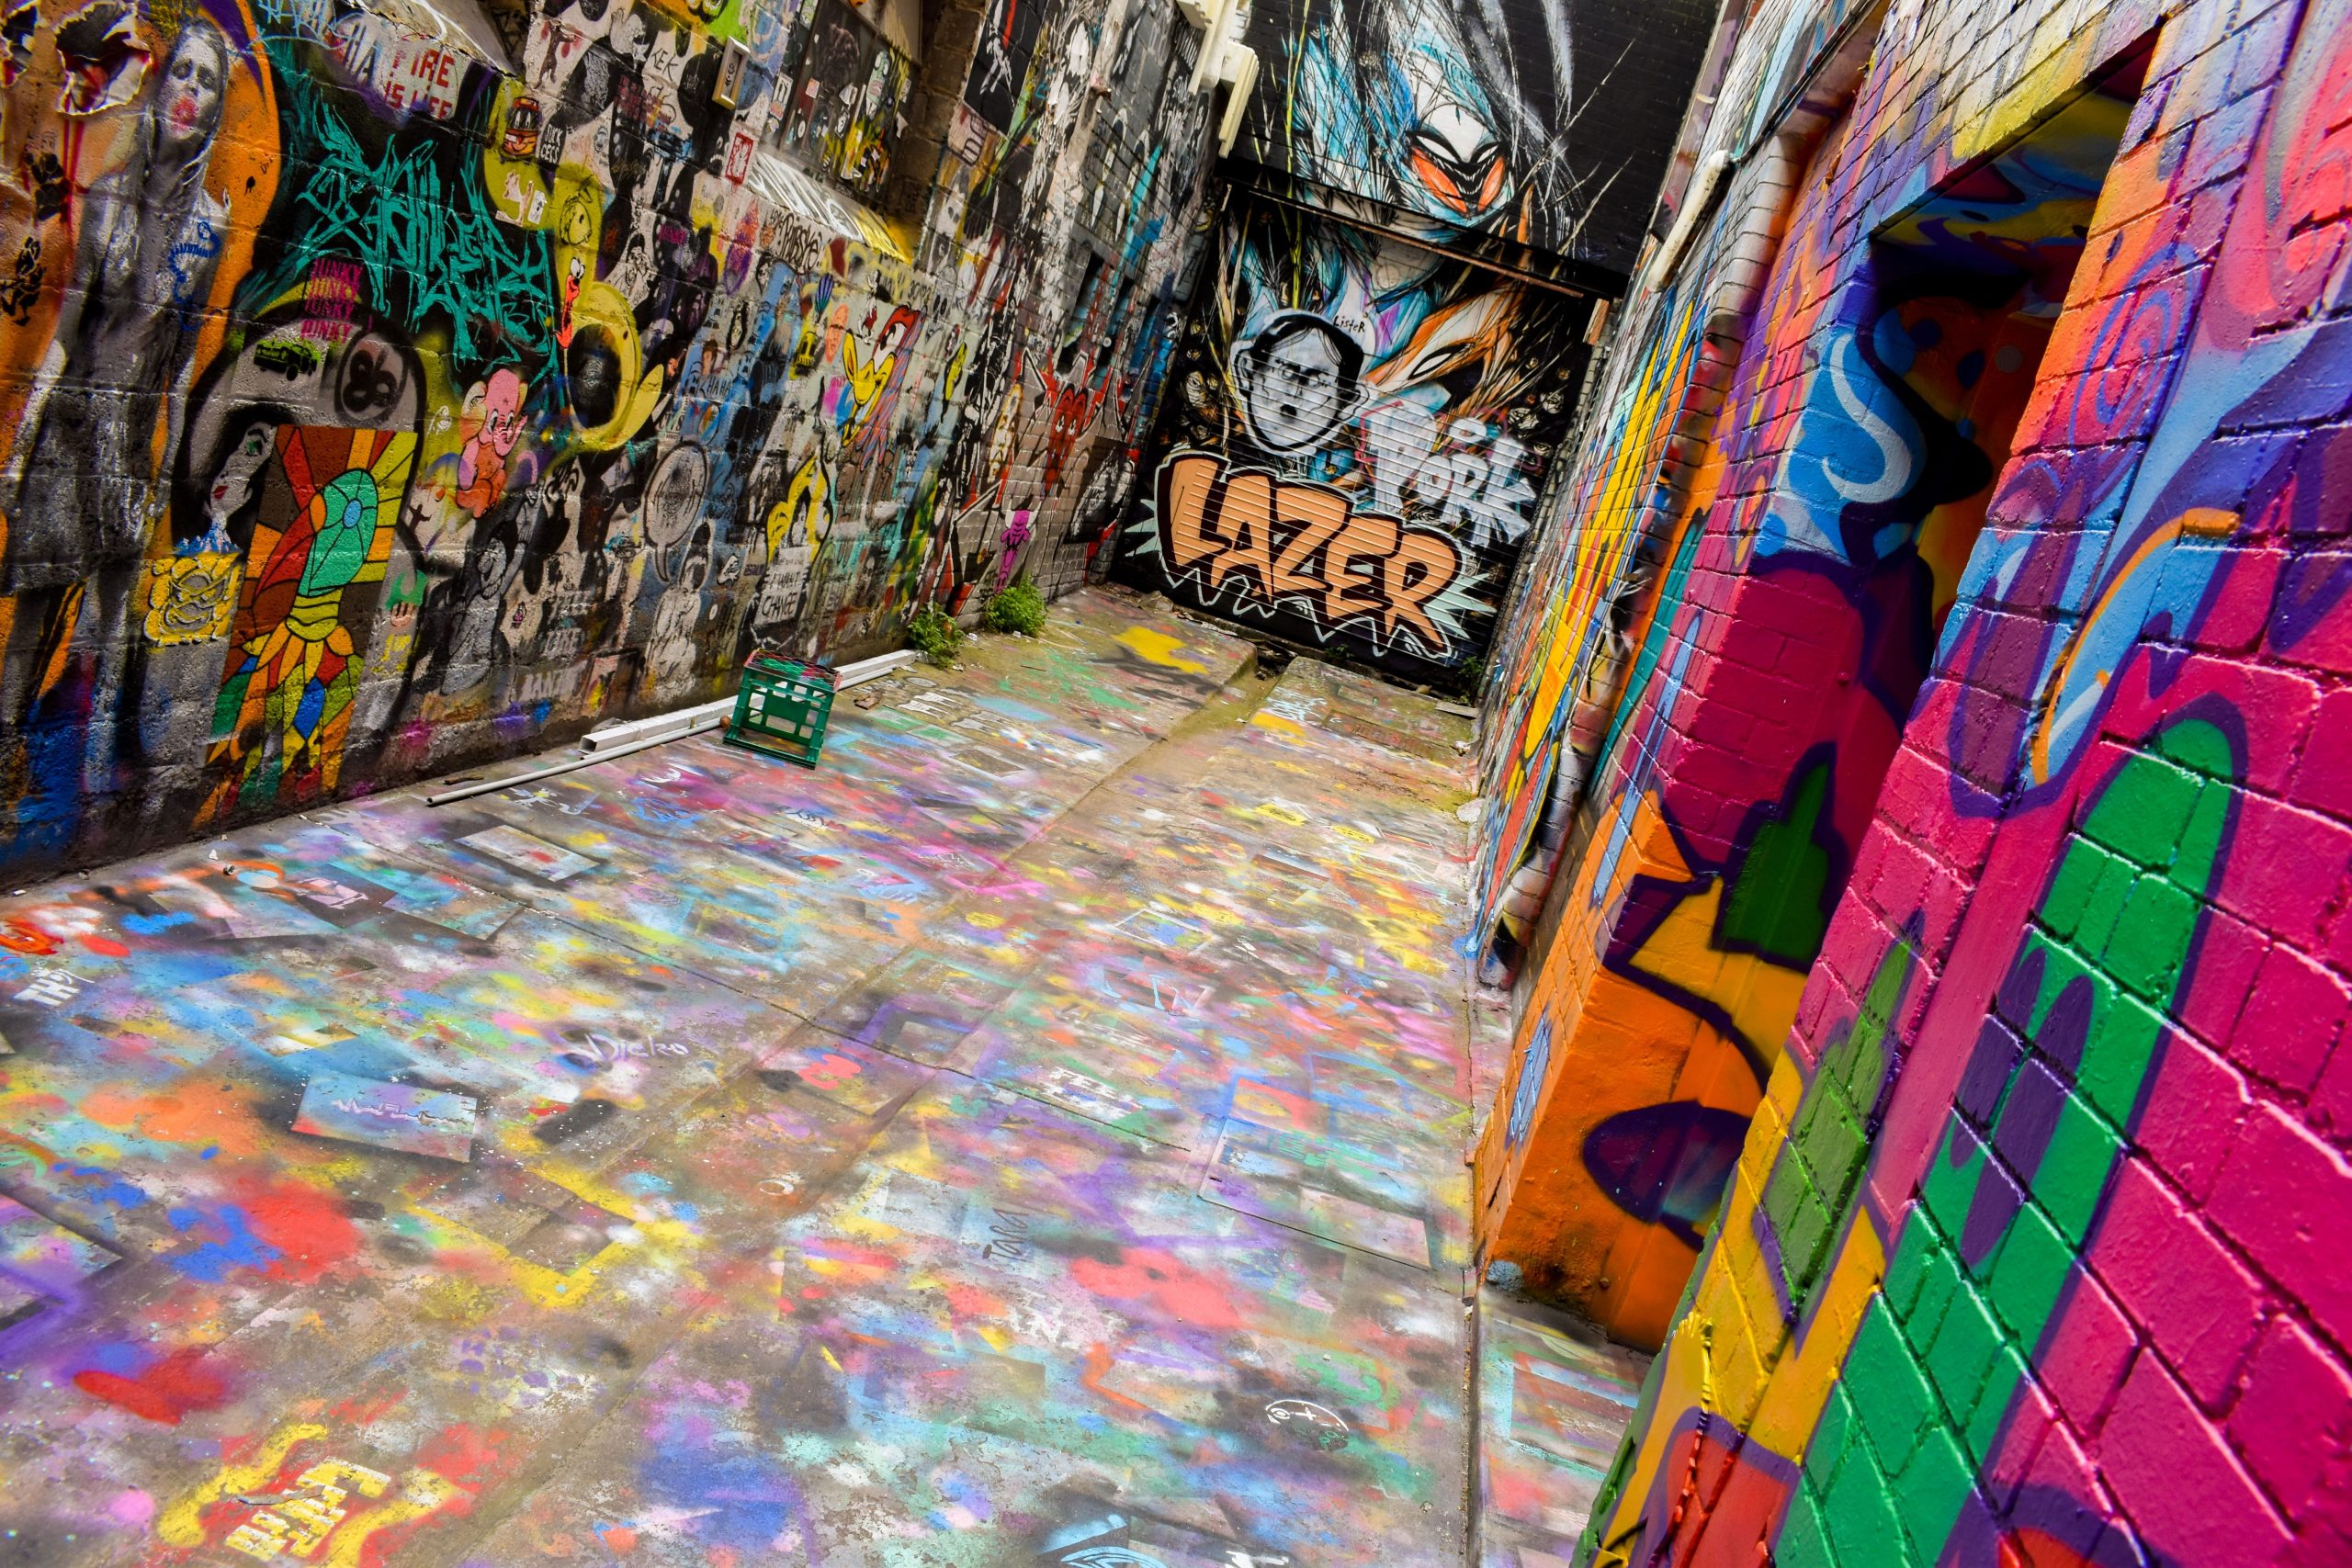 Australia wallpaper, melbourne, alley, paint, graffiti, art, lazer, ghetto